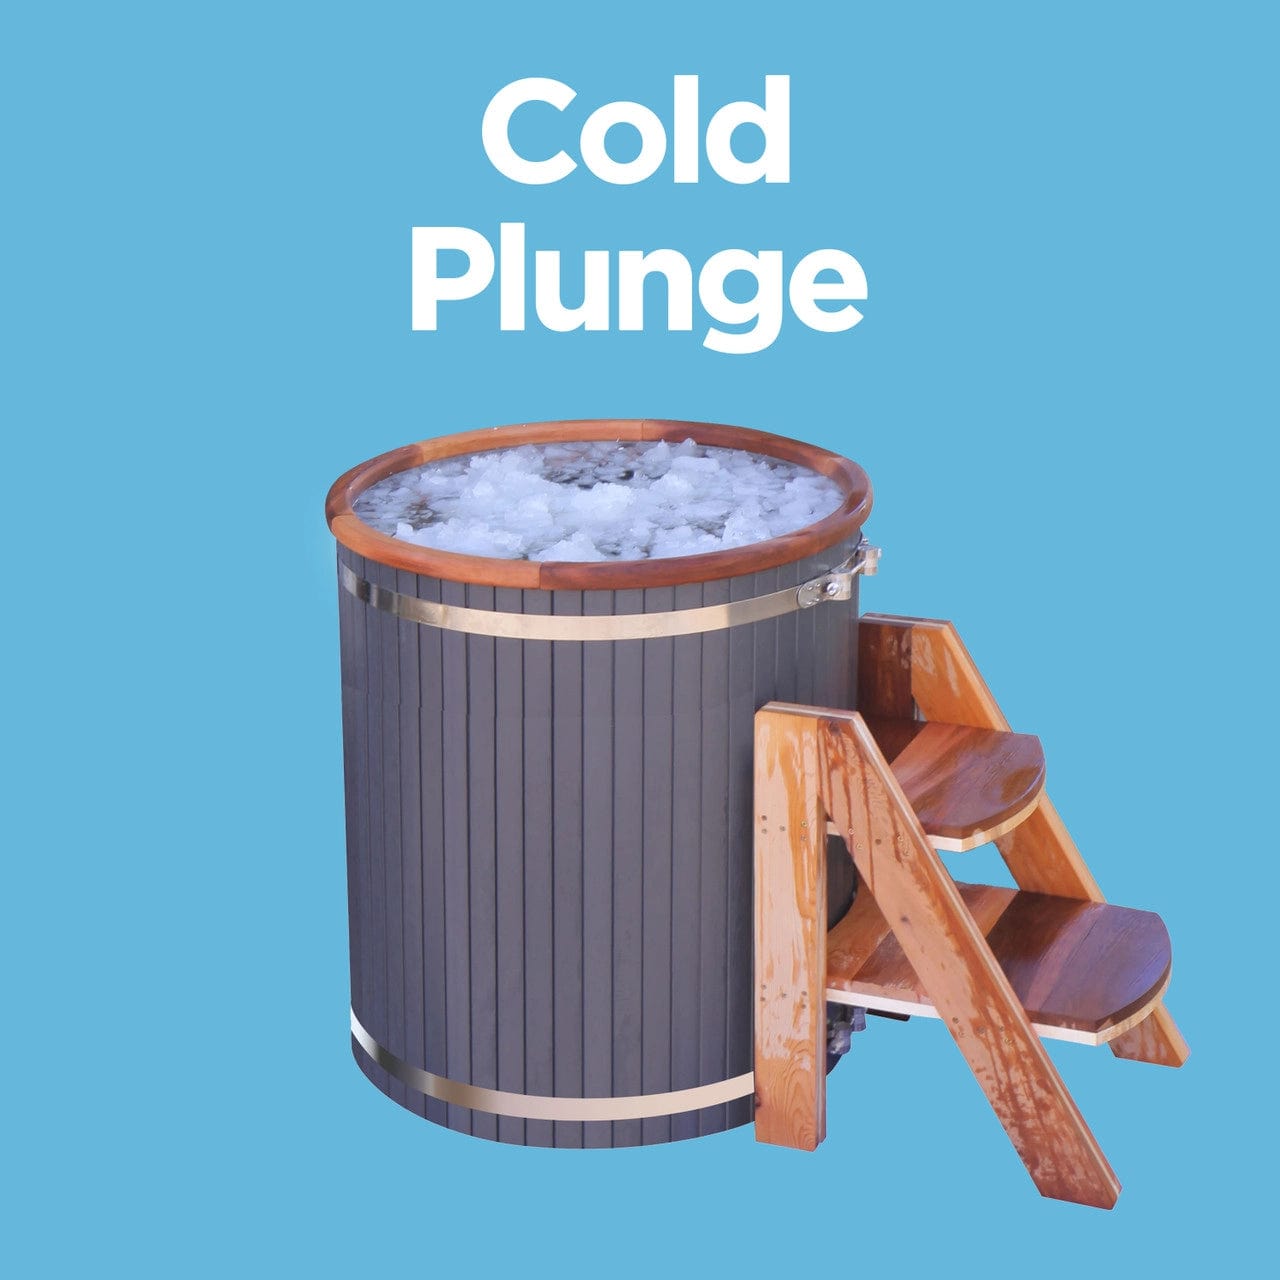 ICE BATH BARREL - The Cold Plunge Store